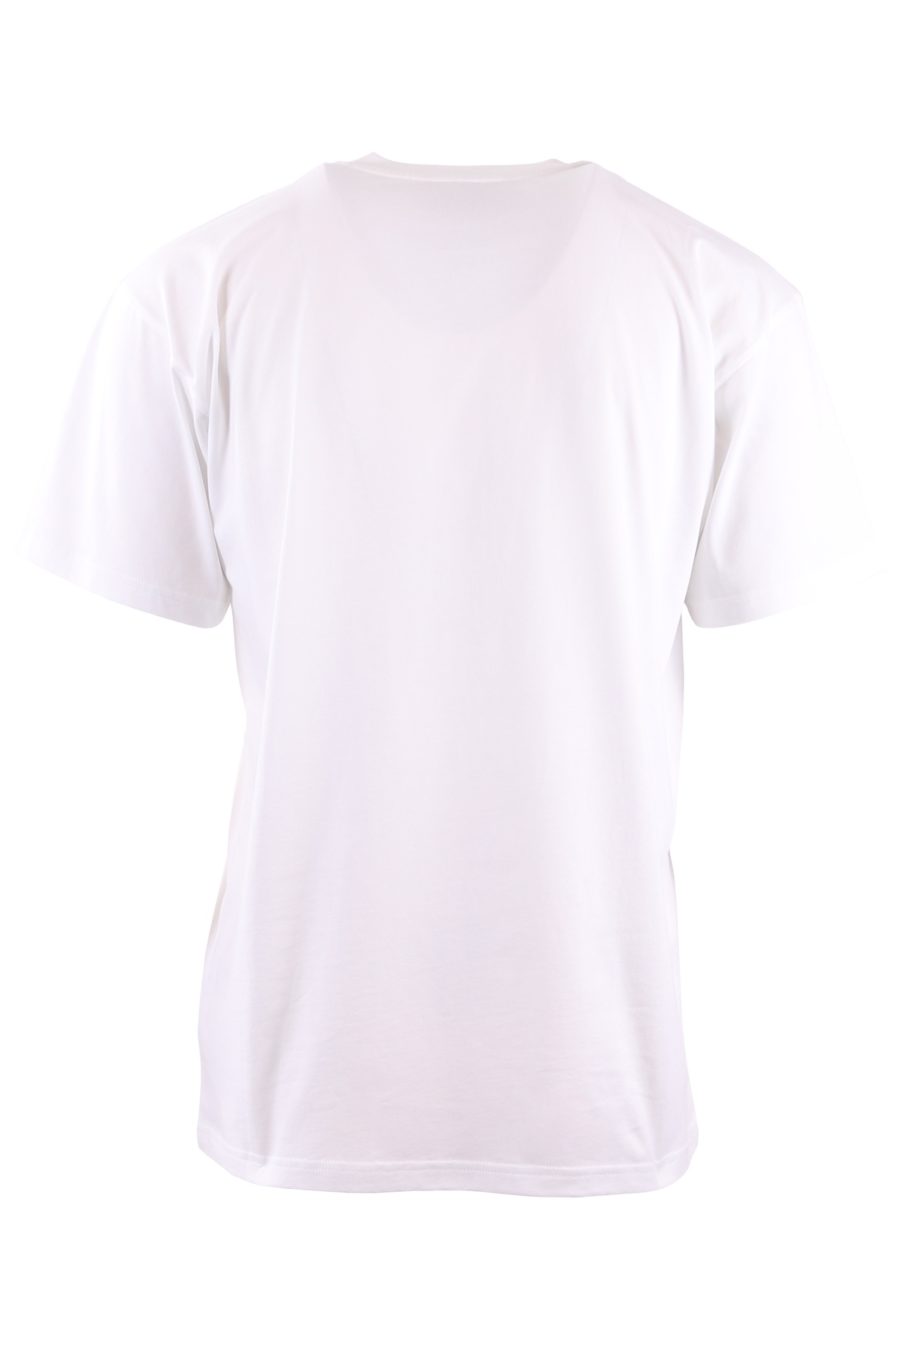 Moschino Couture T-shirt blanc oversize avec grand ours - 6c7718be4979da96f15fad71e14a796f46c6ec47